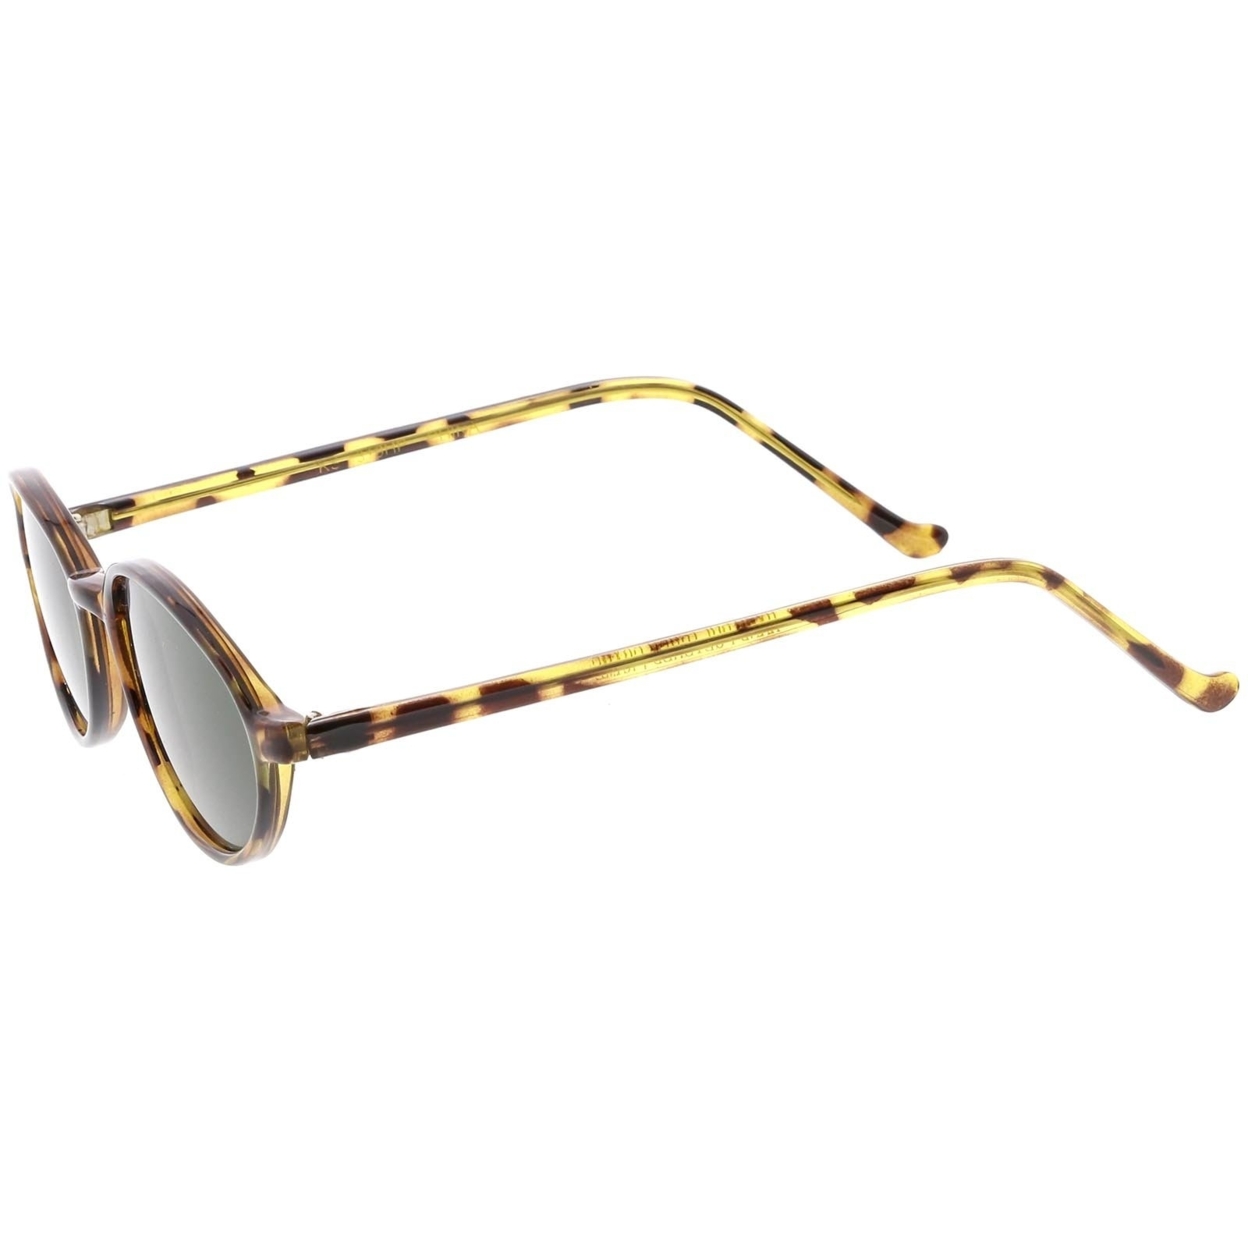 True Vintage Oval Sunglasses Slim Arms Neutral Colored Round Lens 49mm - Black / Smoke